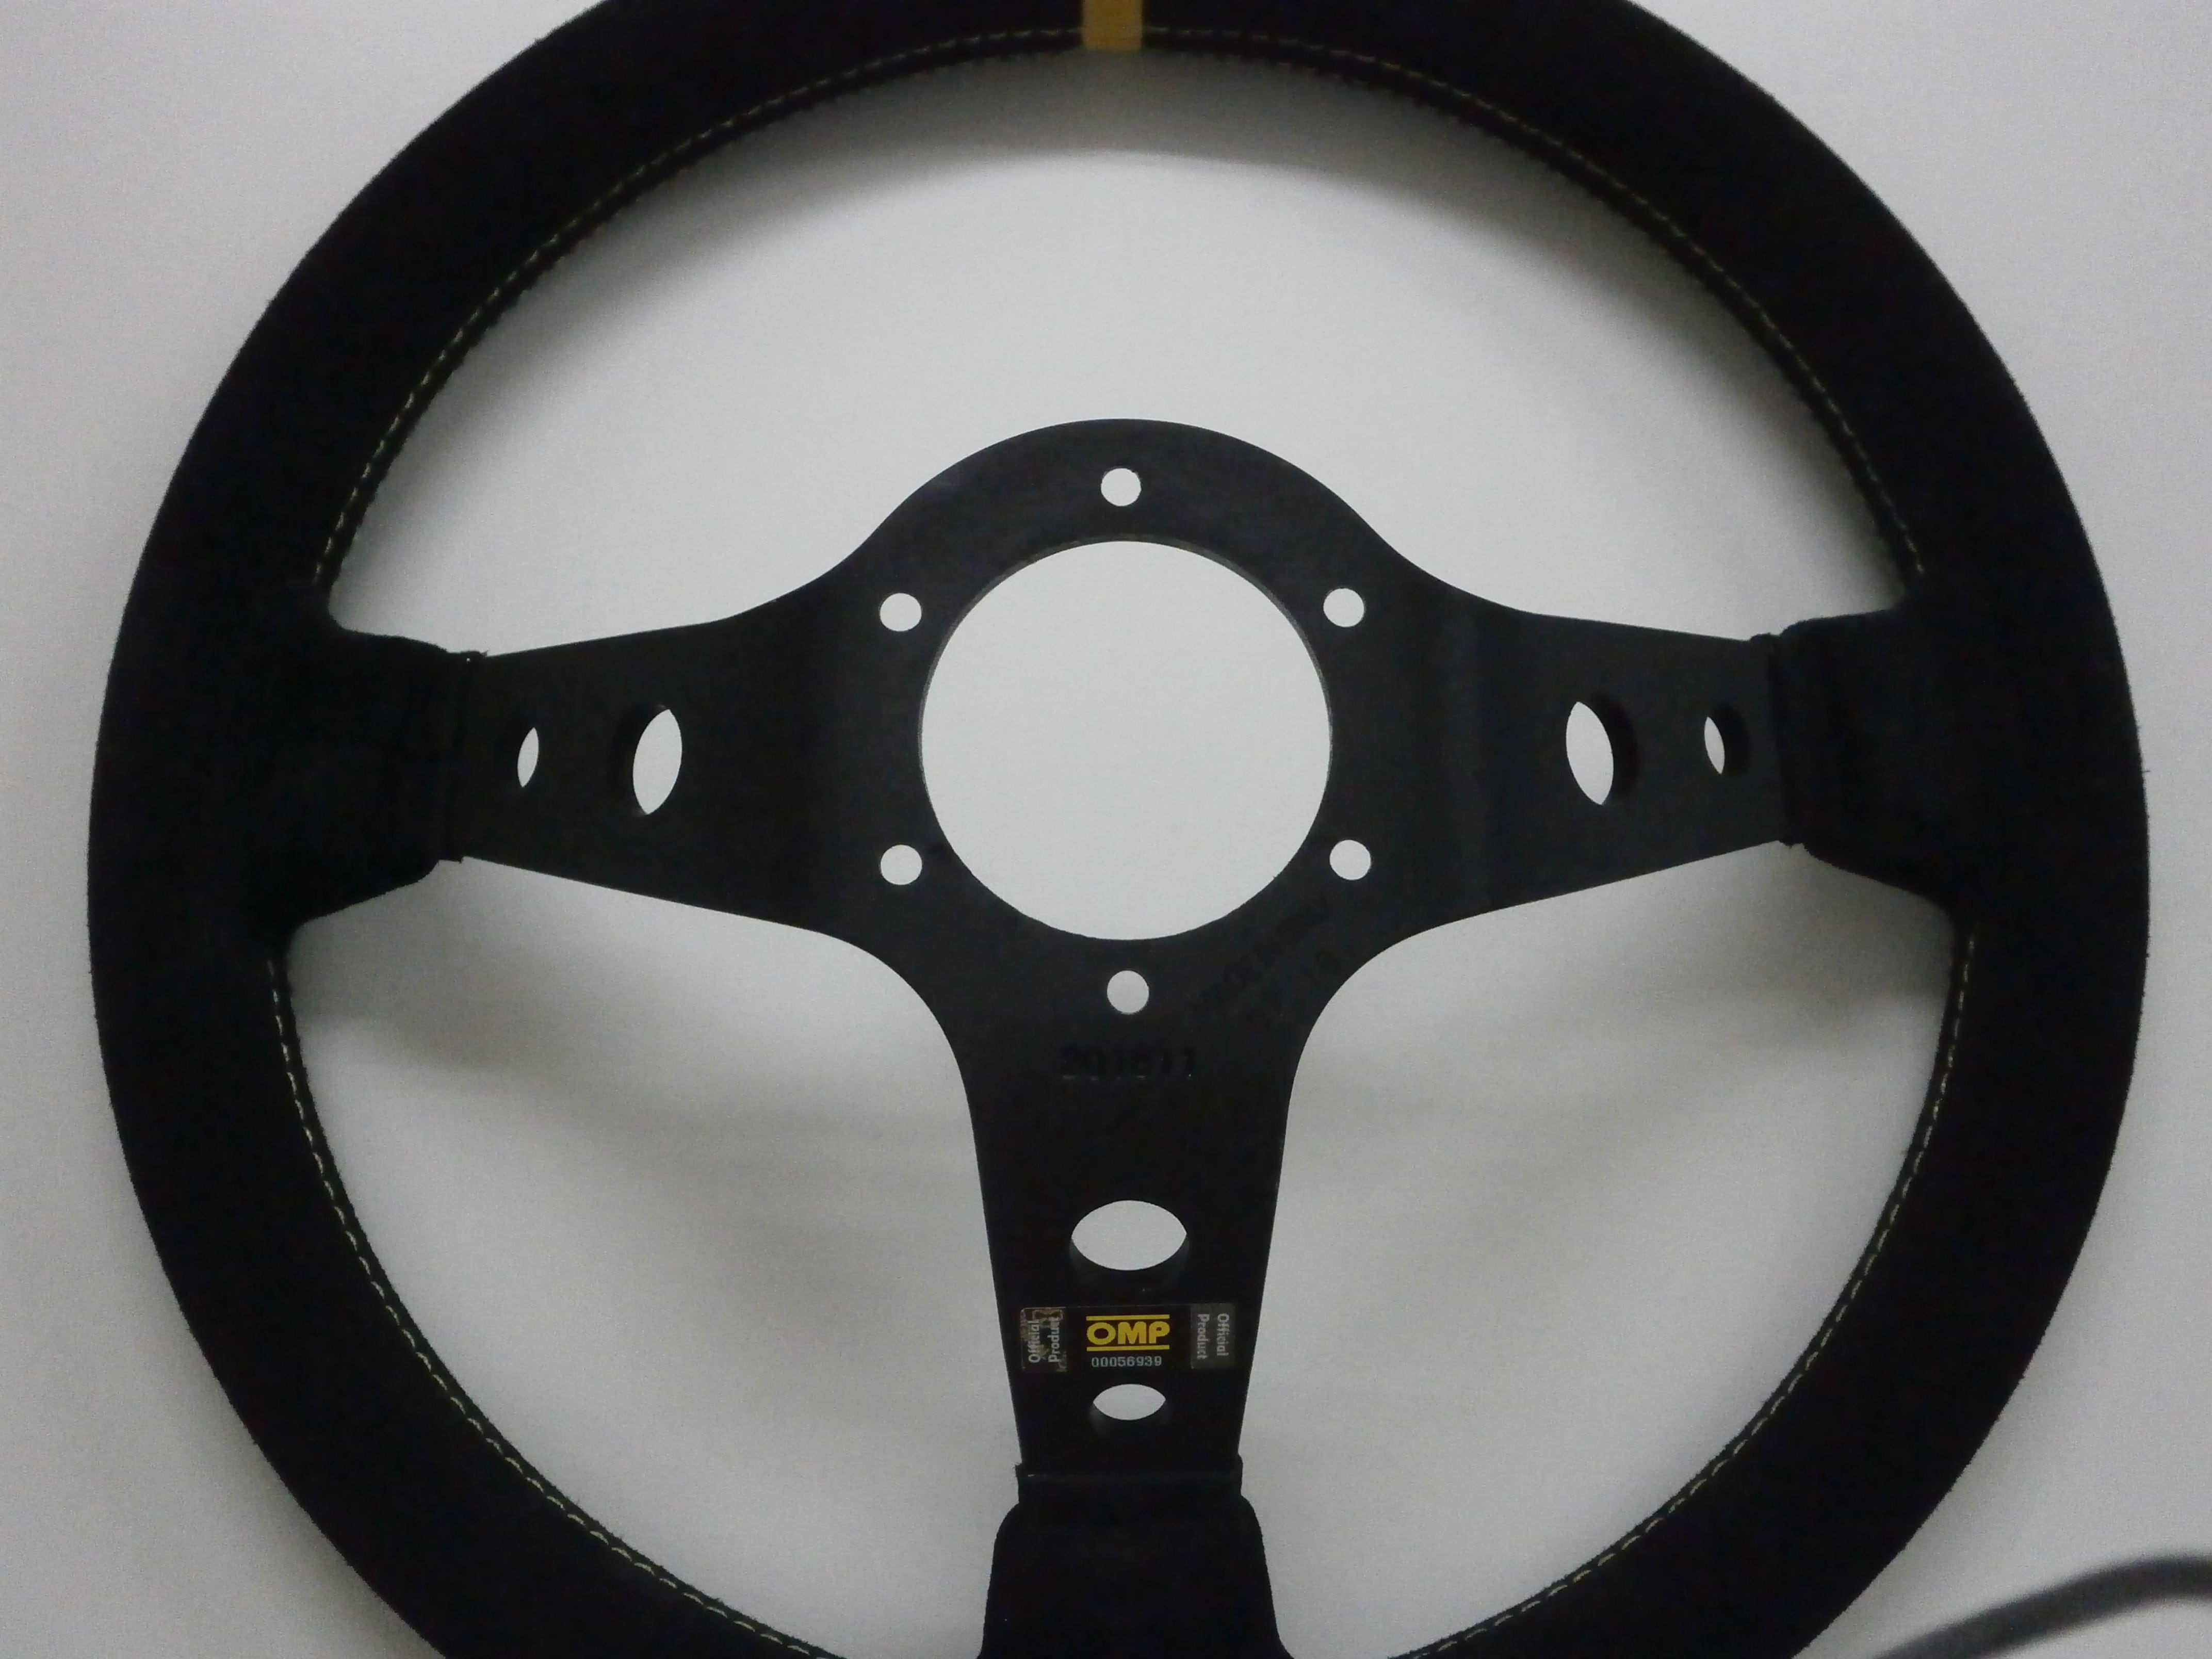 Omp Steering Wheel 正規品サンプル画像 Limit Omp 正規輸入代理店